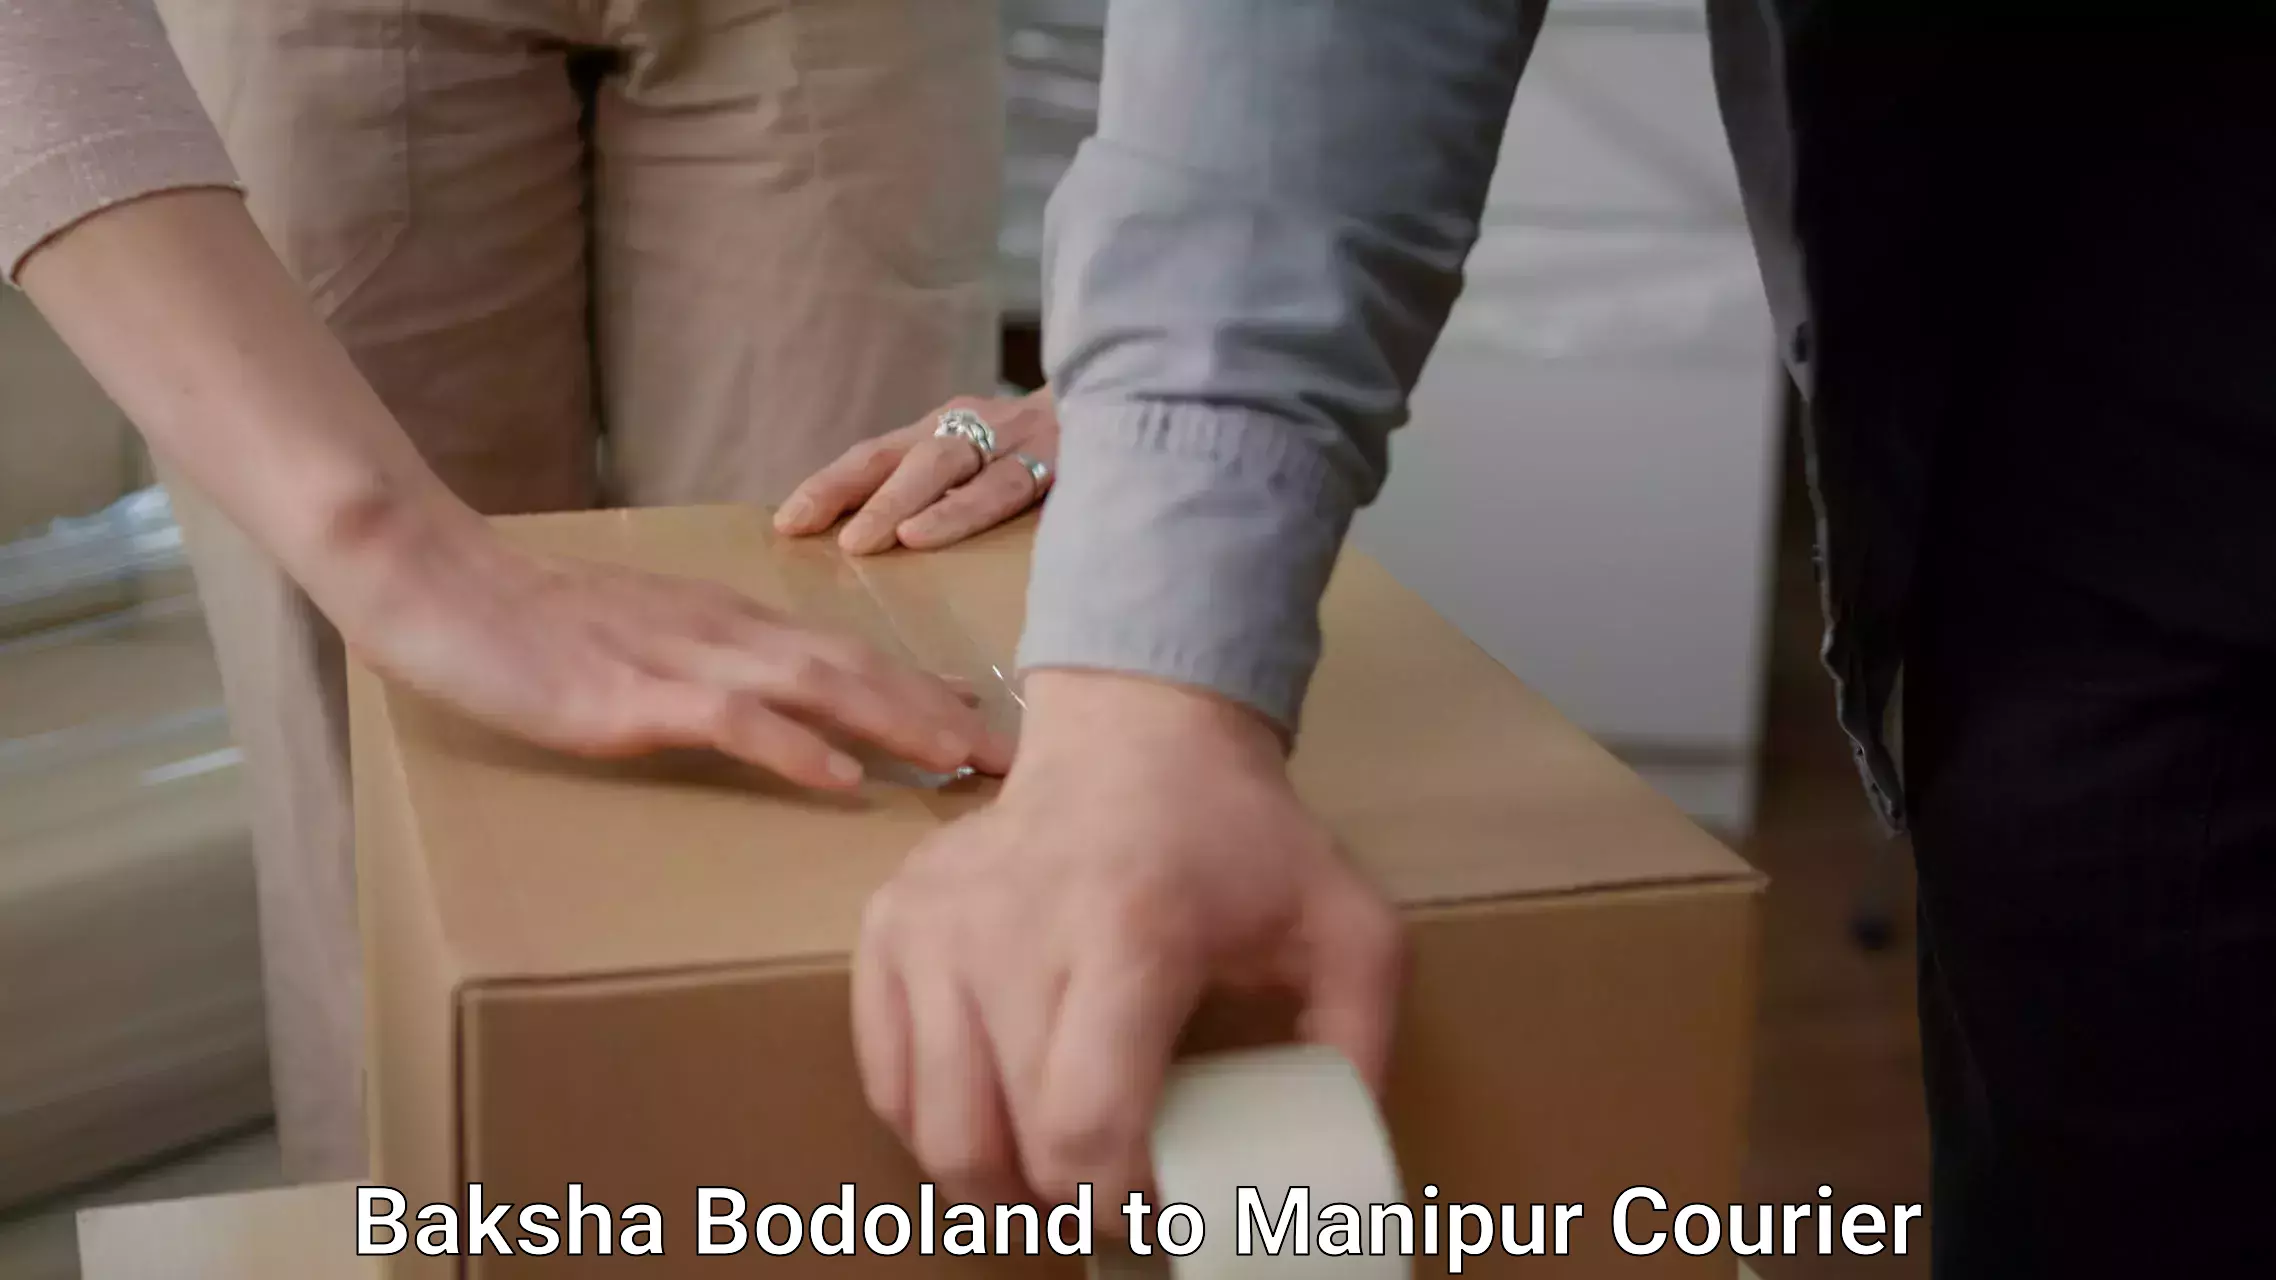 Moving service excellence Baksha Bodoland to Manipur